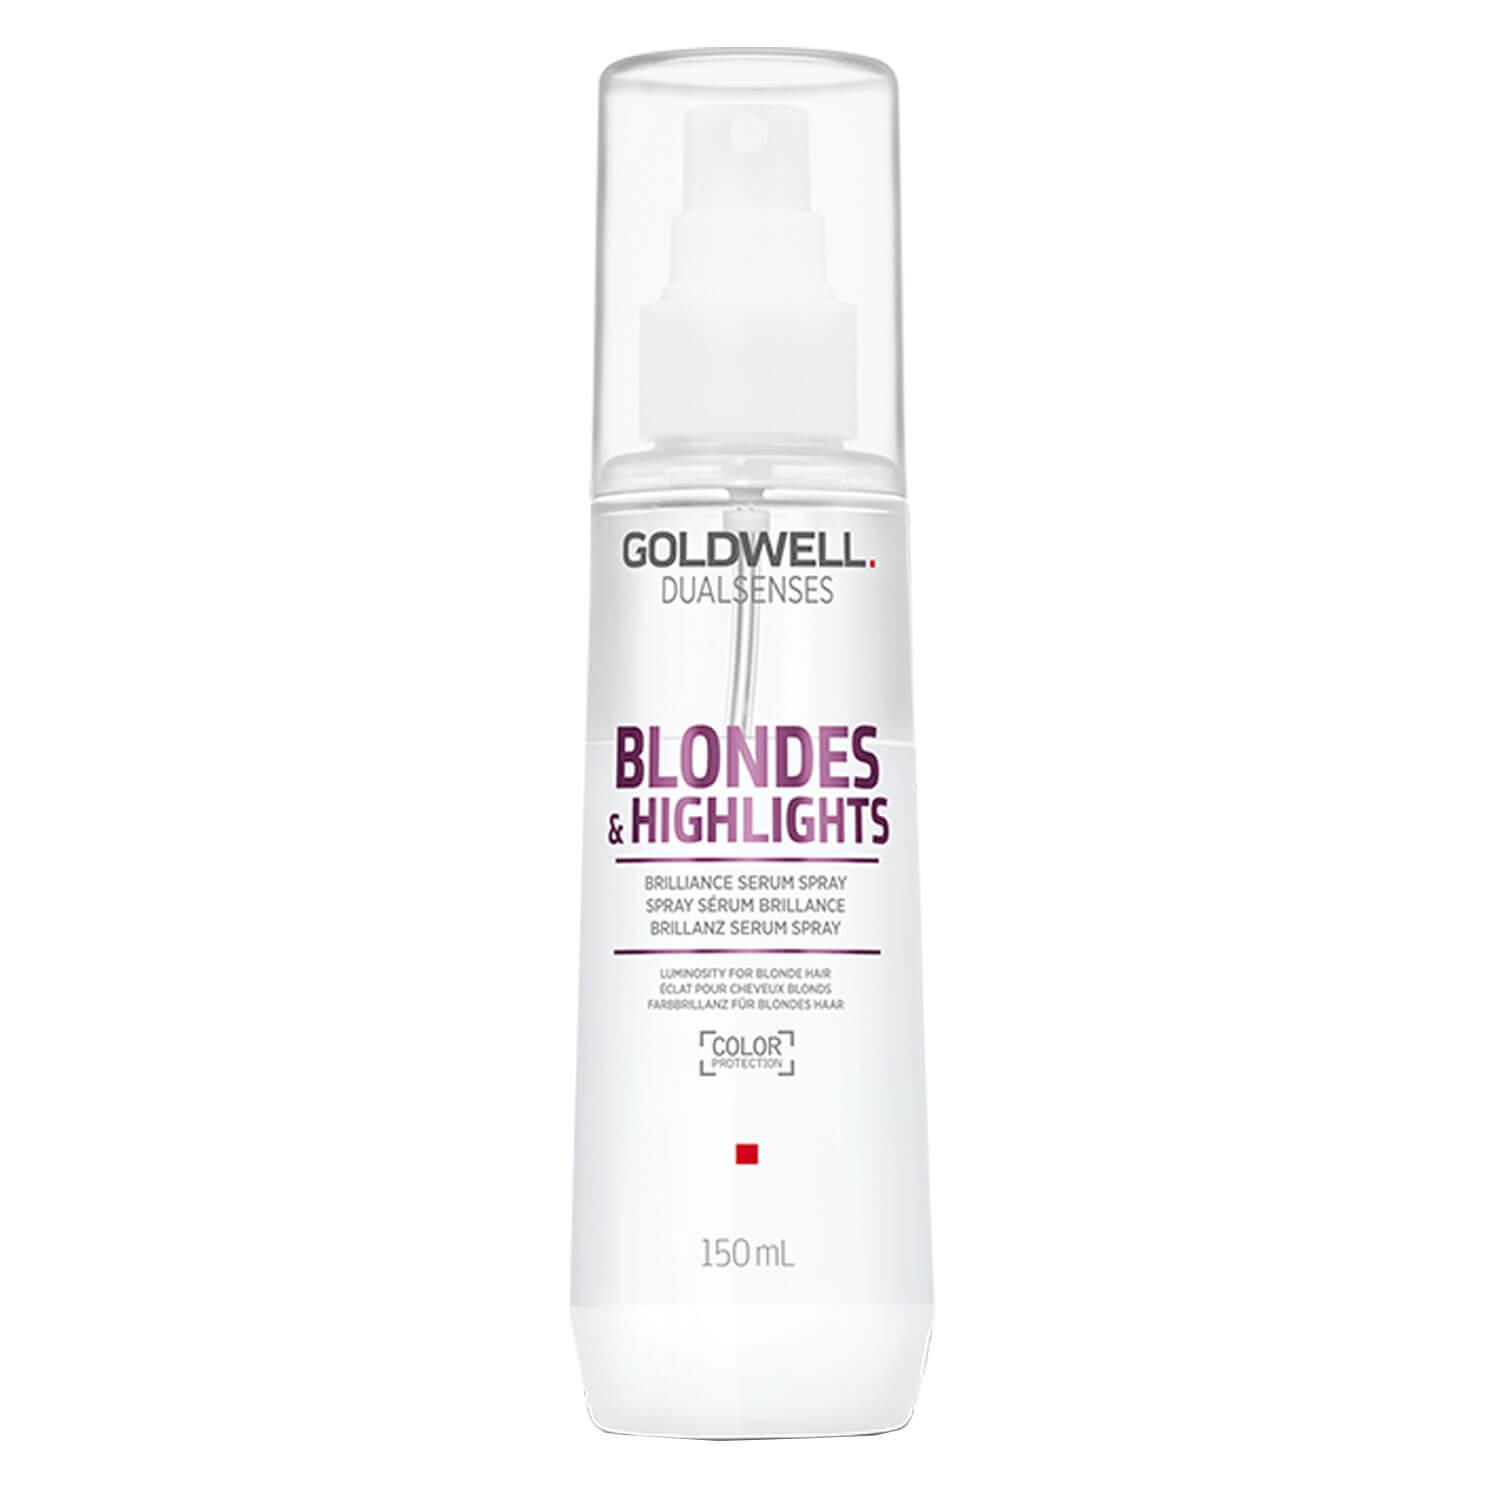 Dualsenses Blondes & Highlights - Brilliance Serum Spray